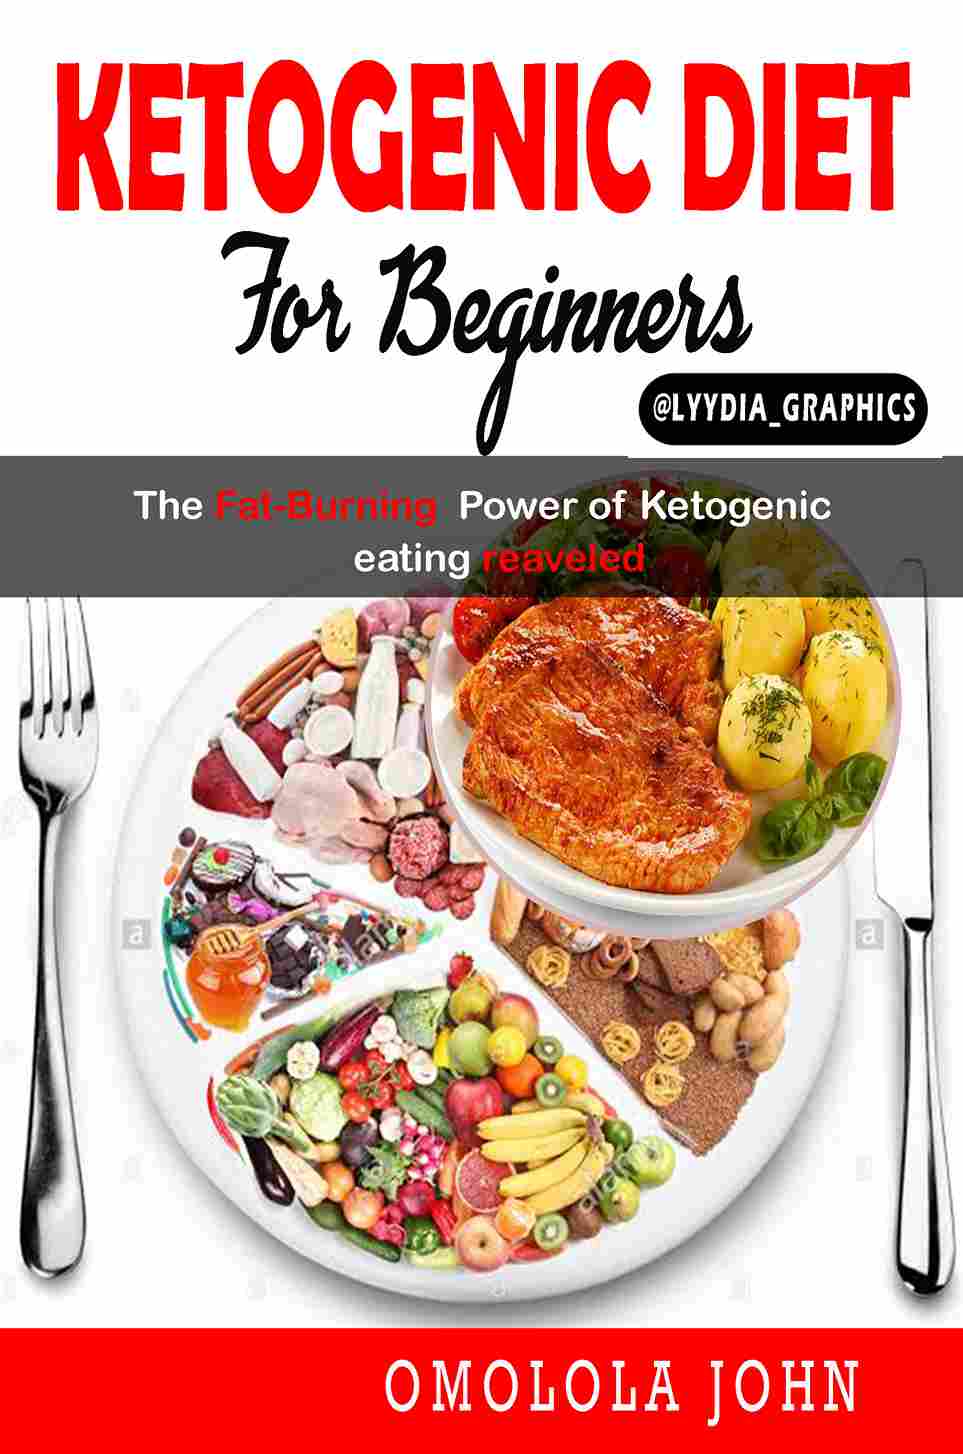 Ketogenic Diet For Beginners: Book Cover Design